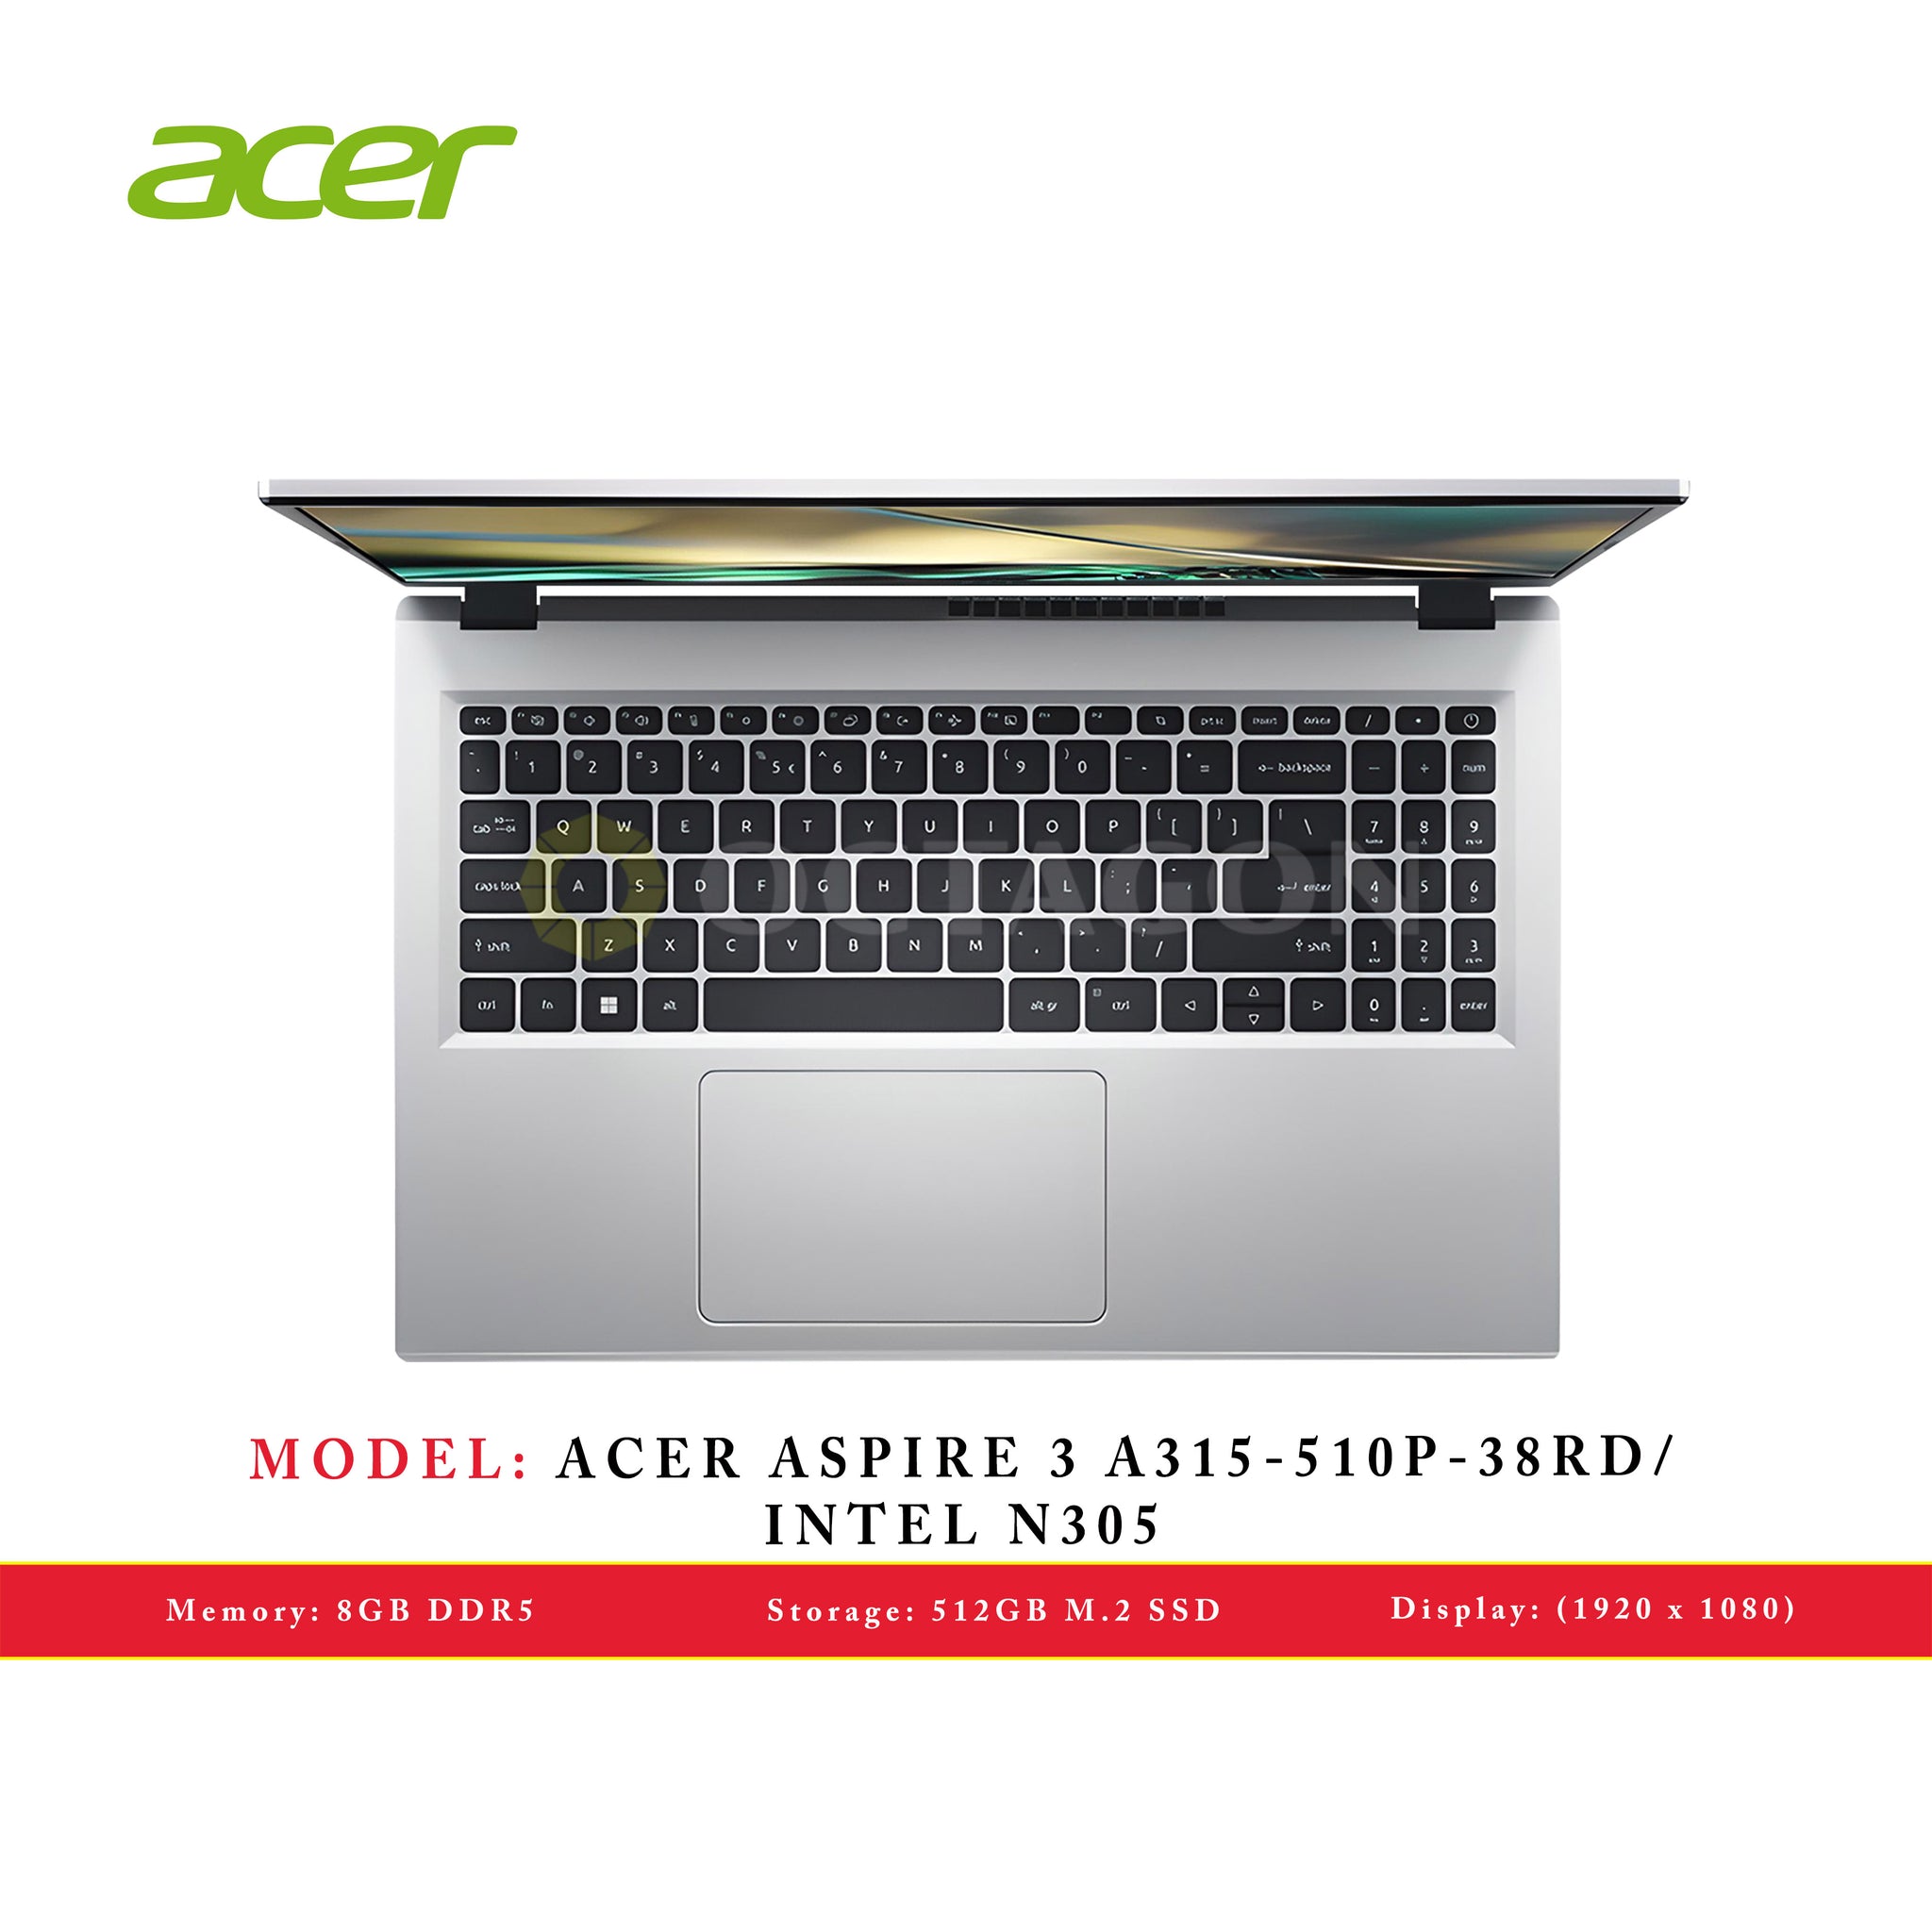 ACER ASPIRE 3 A315-510P-38RD/ INTEL N305